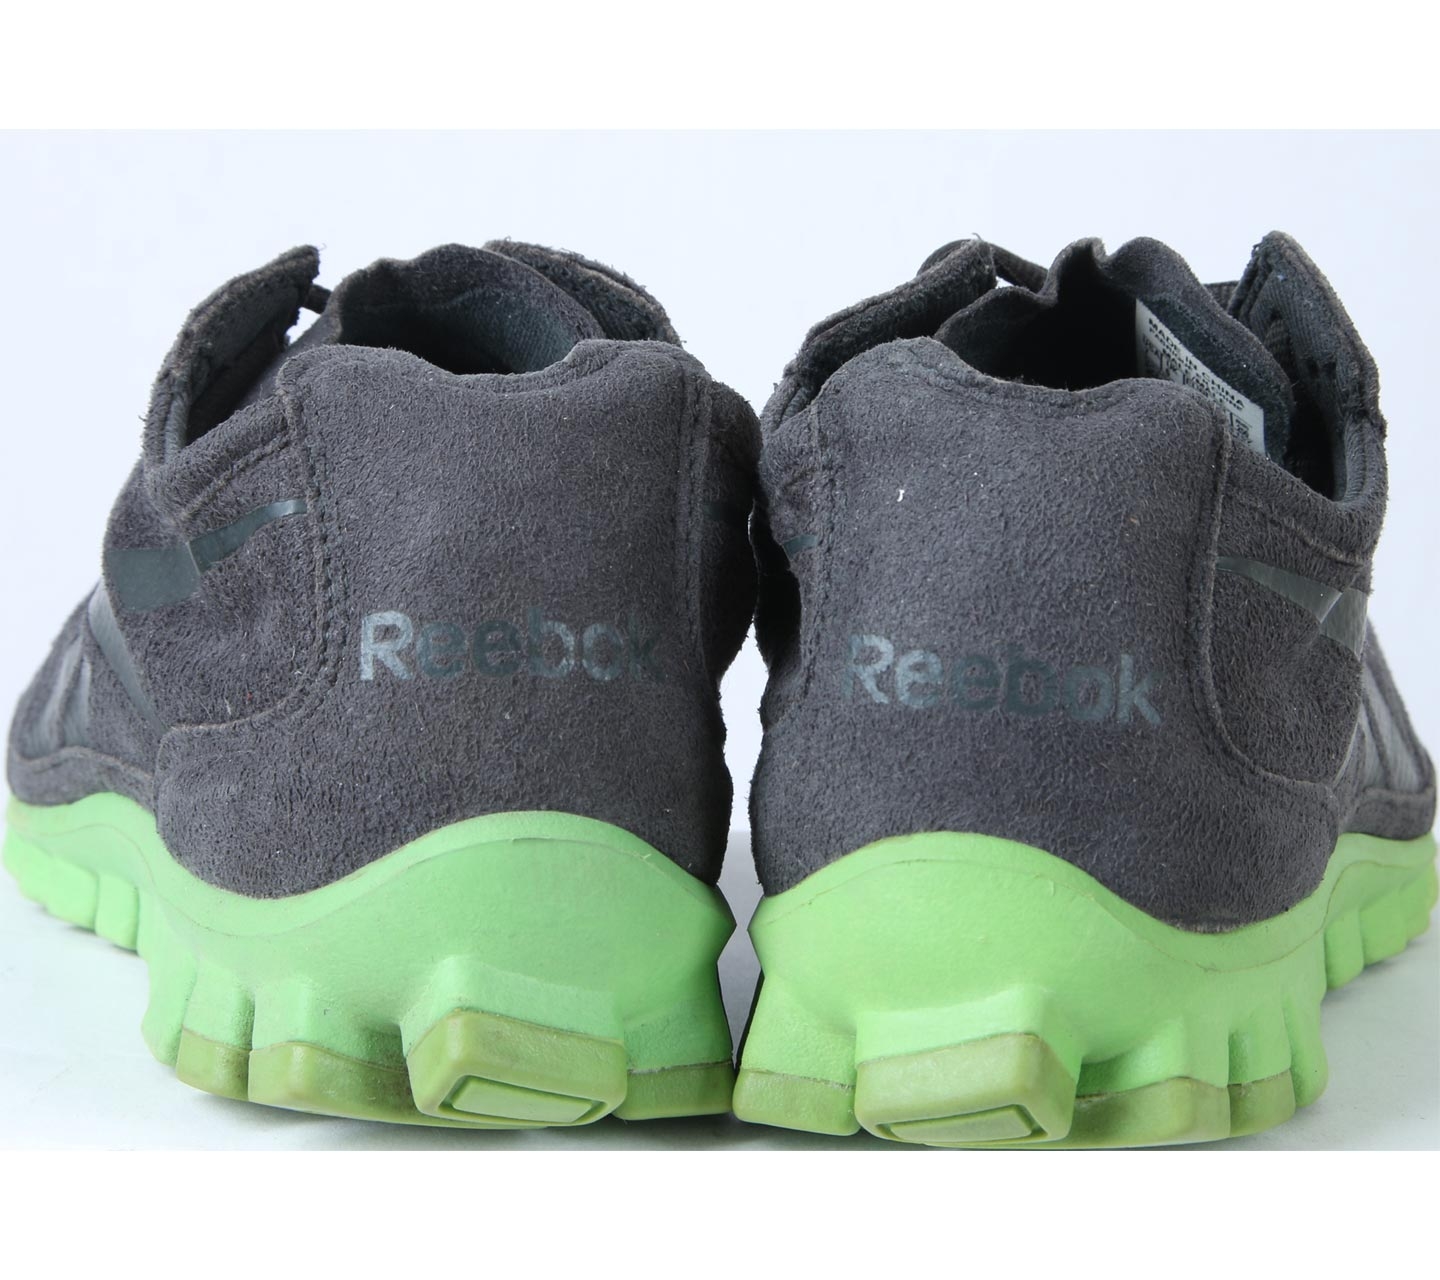 Reebok Black And Green Sneakers